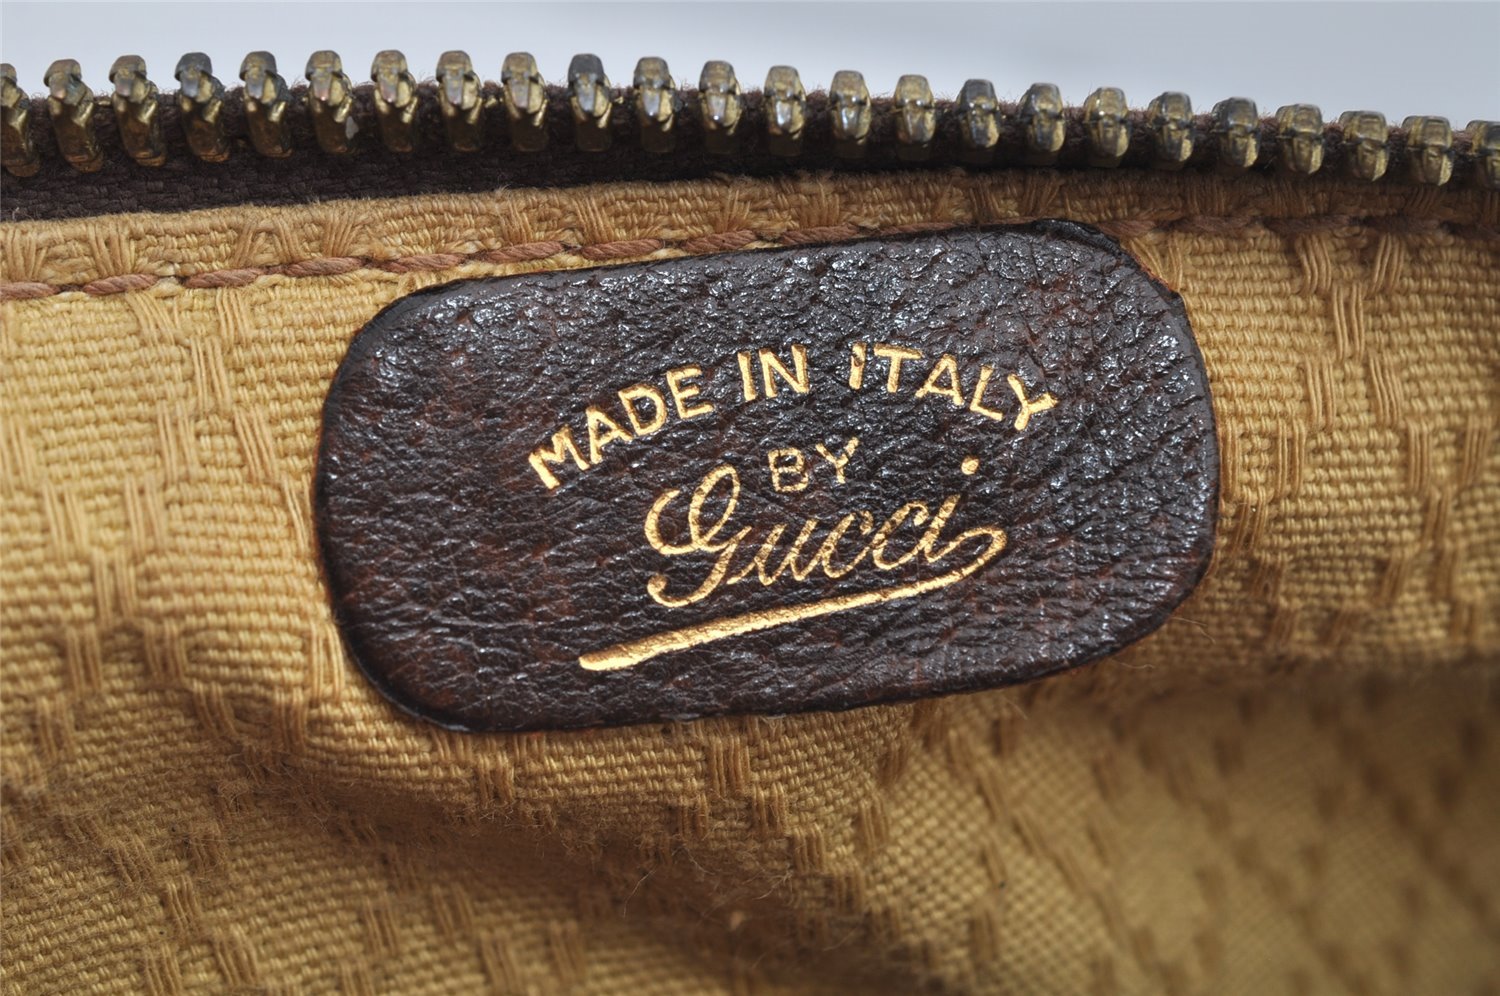 Authentic GUCCI Vintage Hand Boston Bag Purse Suede Leather Brown 9347J